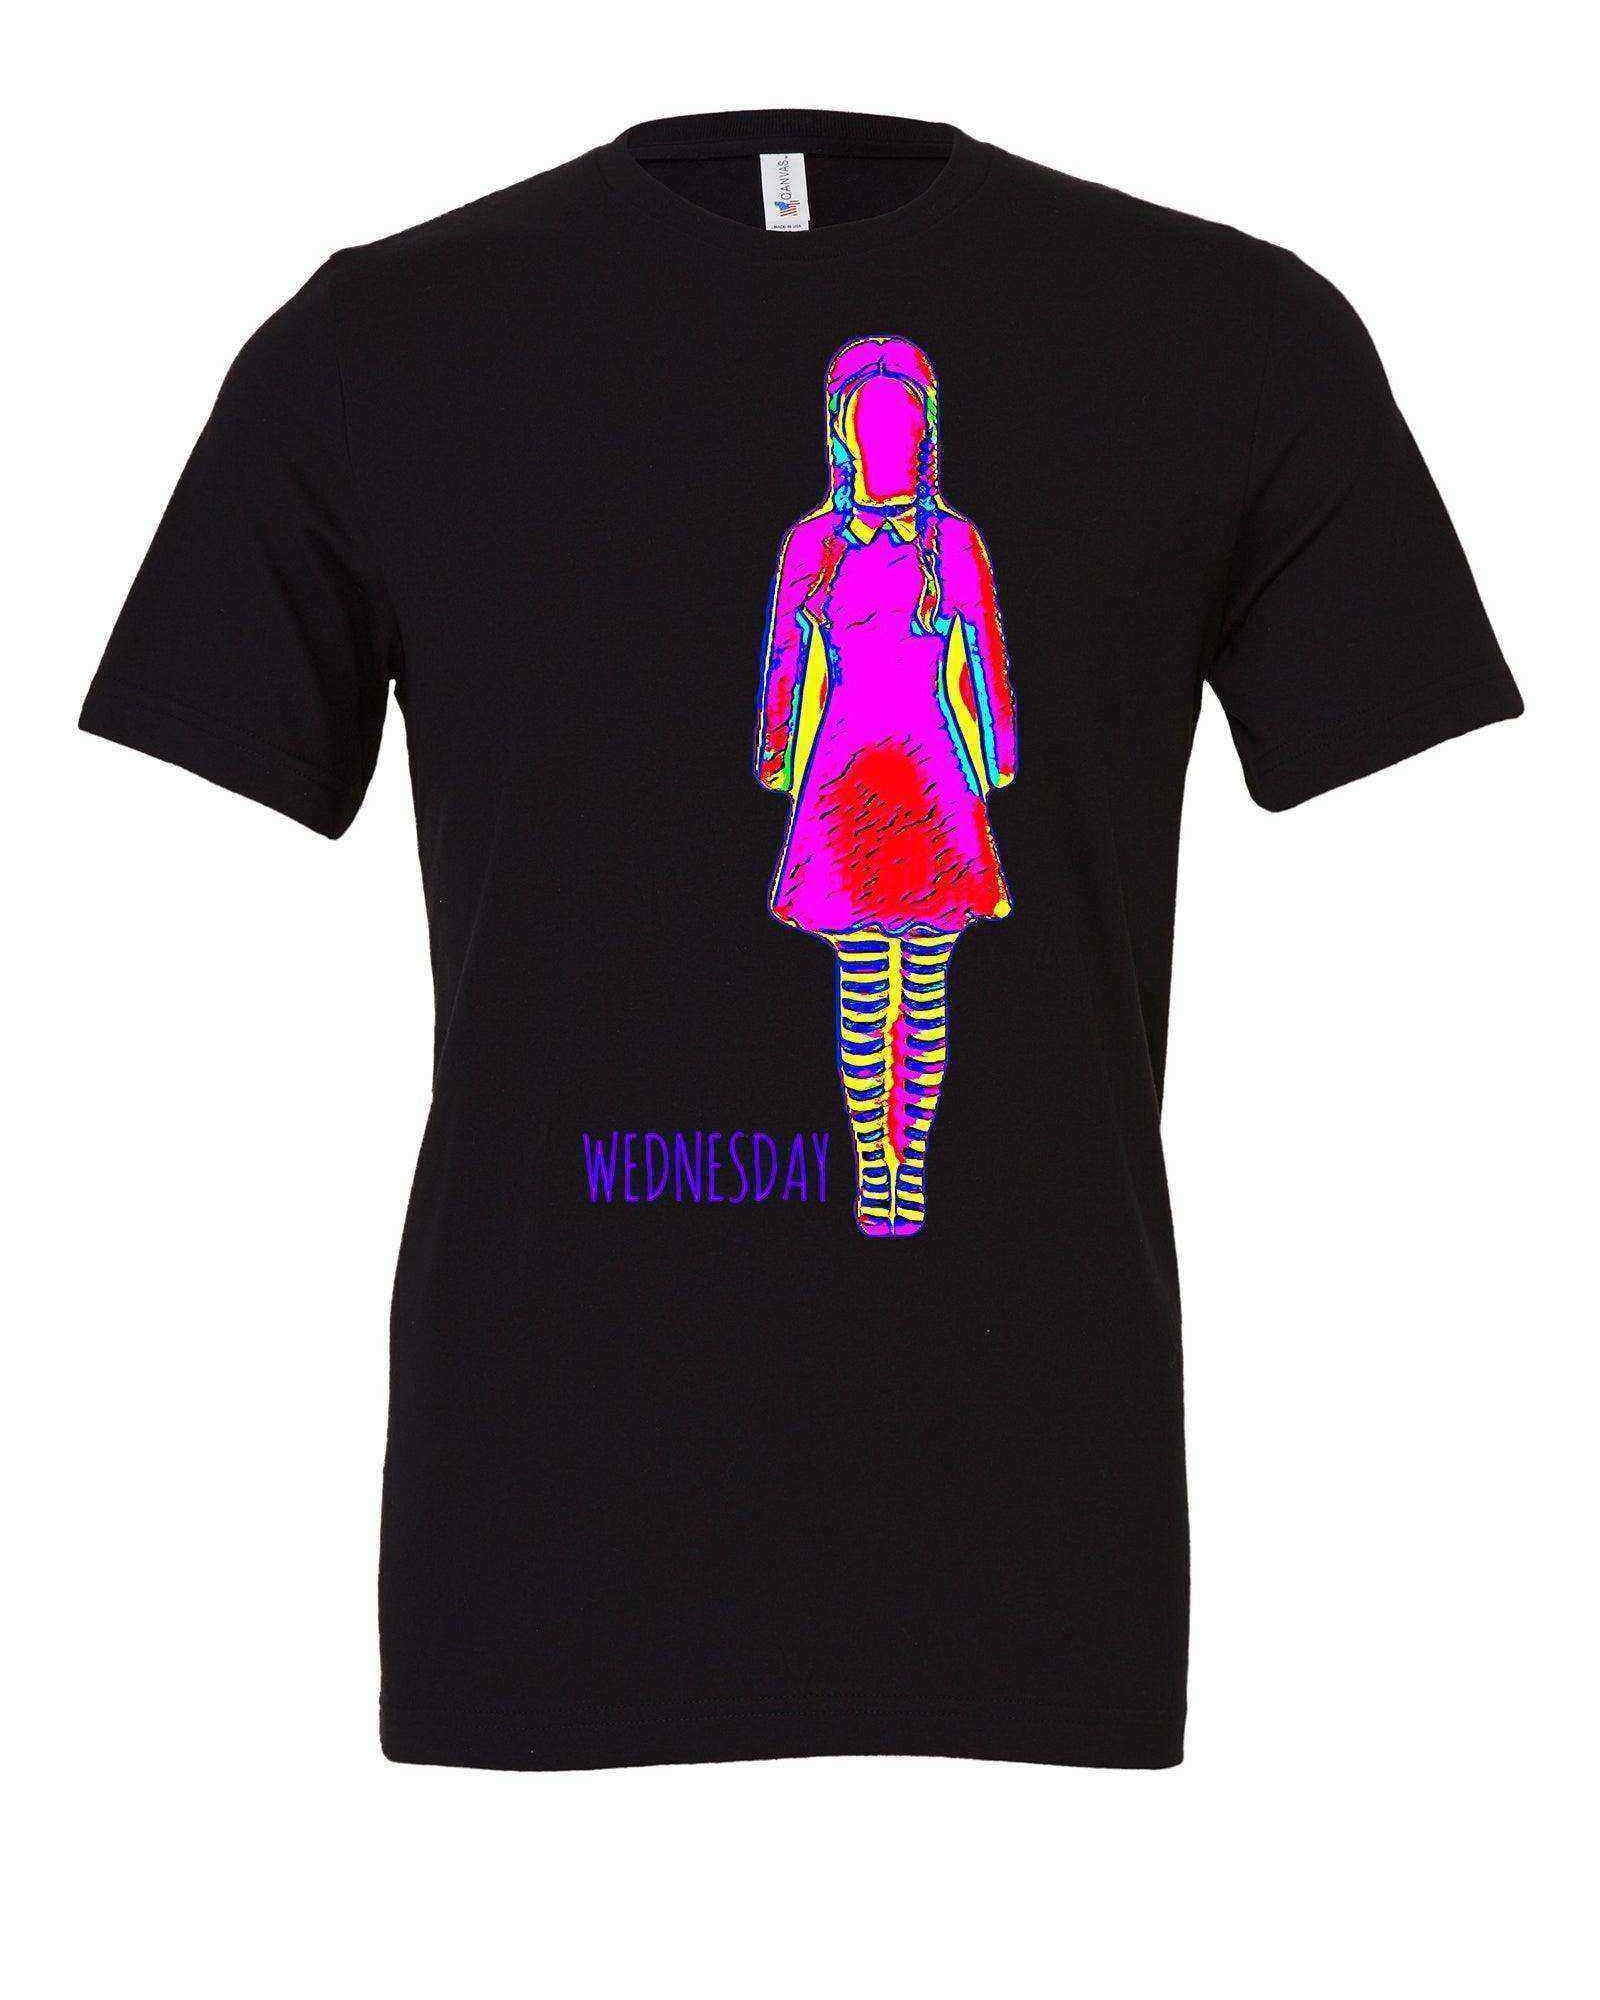 Womens | Neon Wednesday Shirt | Wednesday Shirts | Addams Shirt - Dylan's Tees